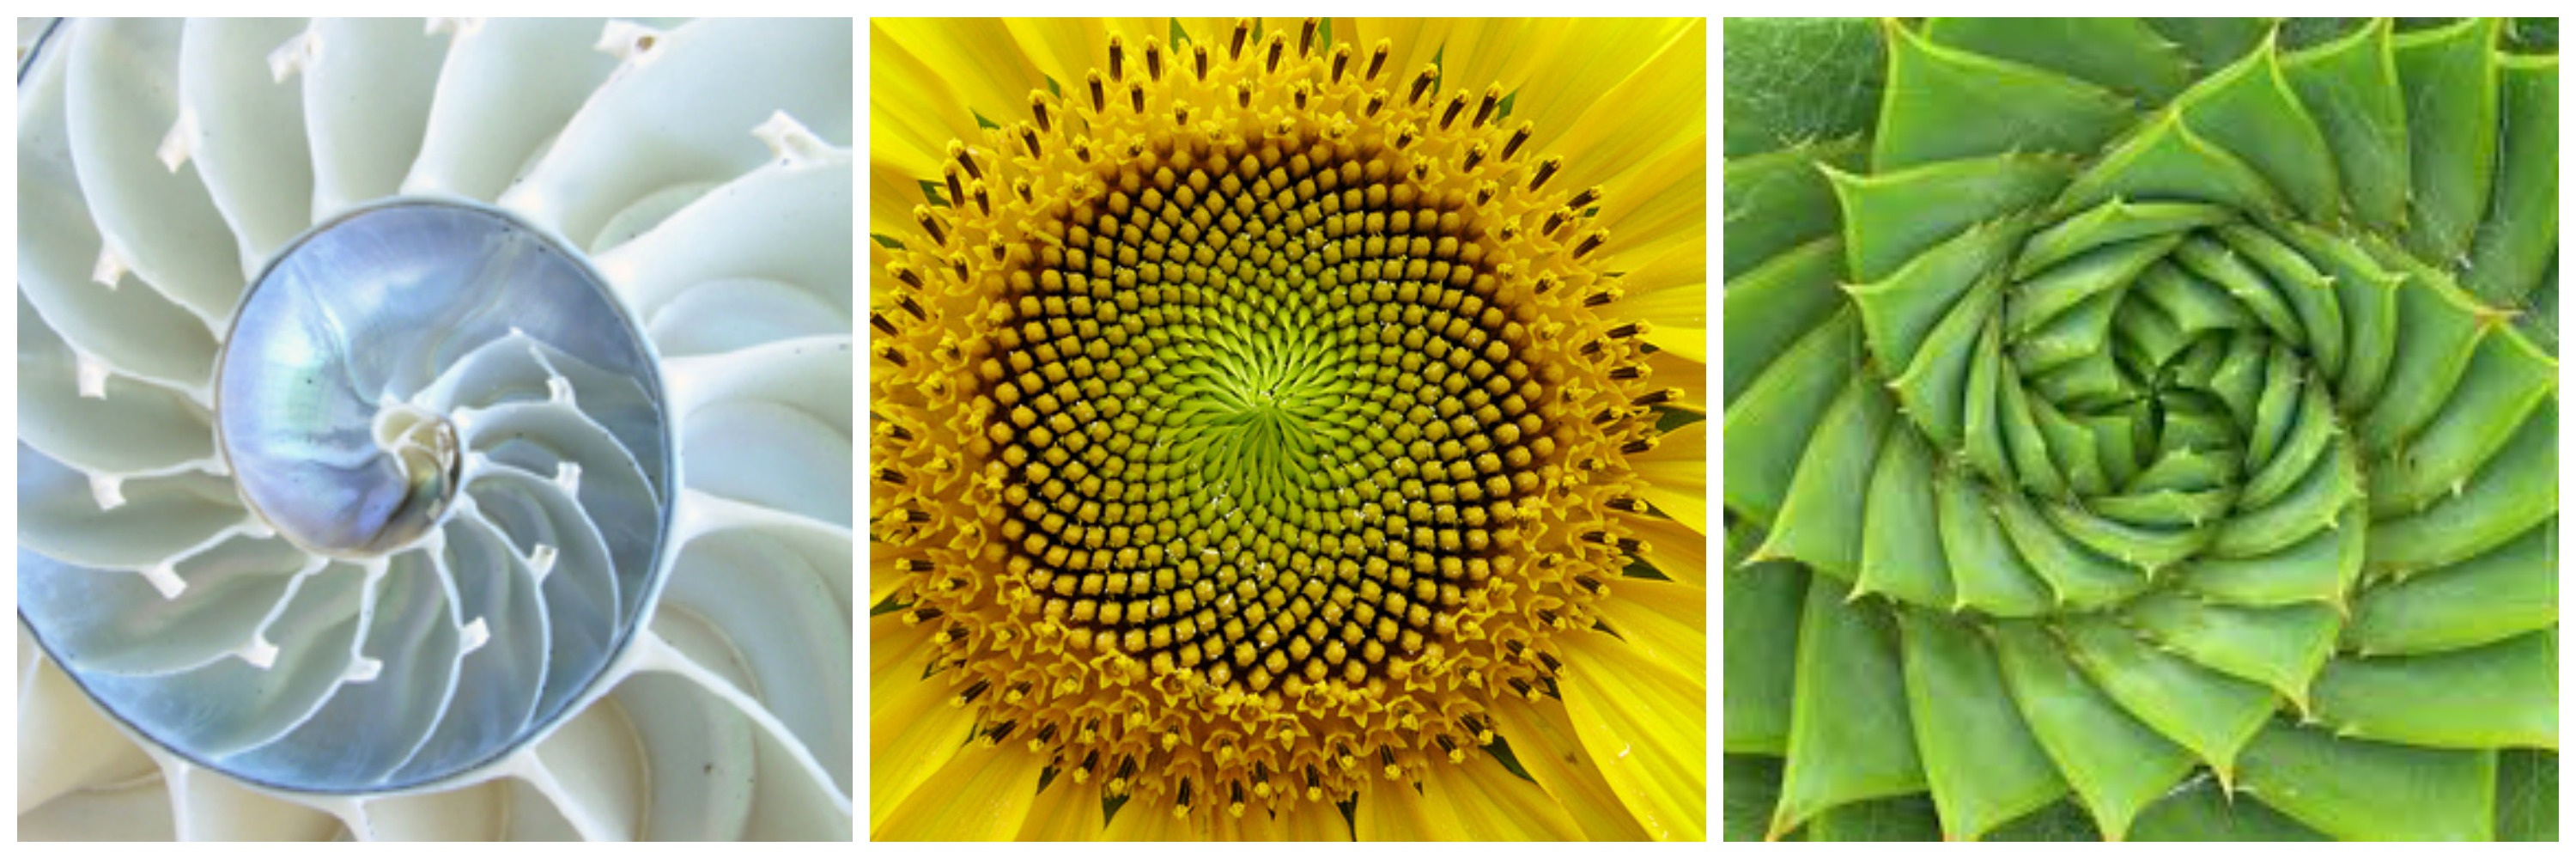 Fibonacci spirals are found throughout the natural world